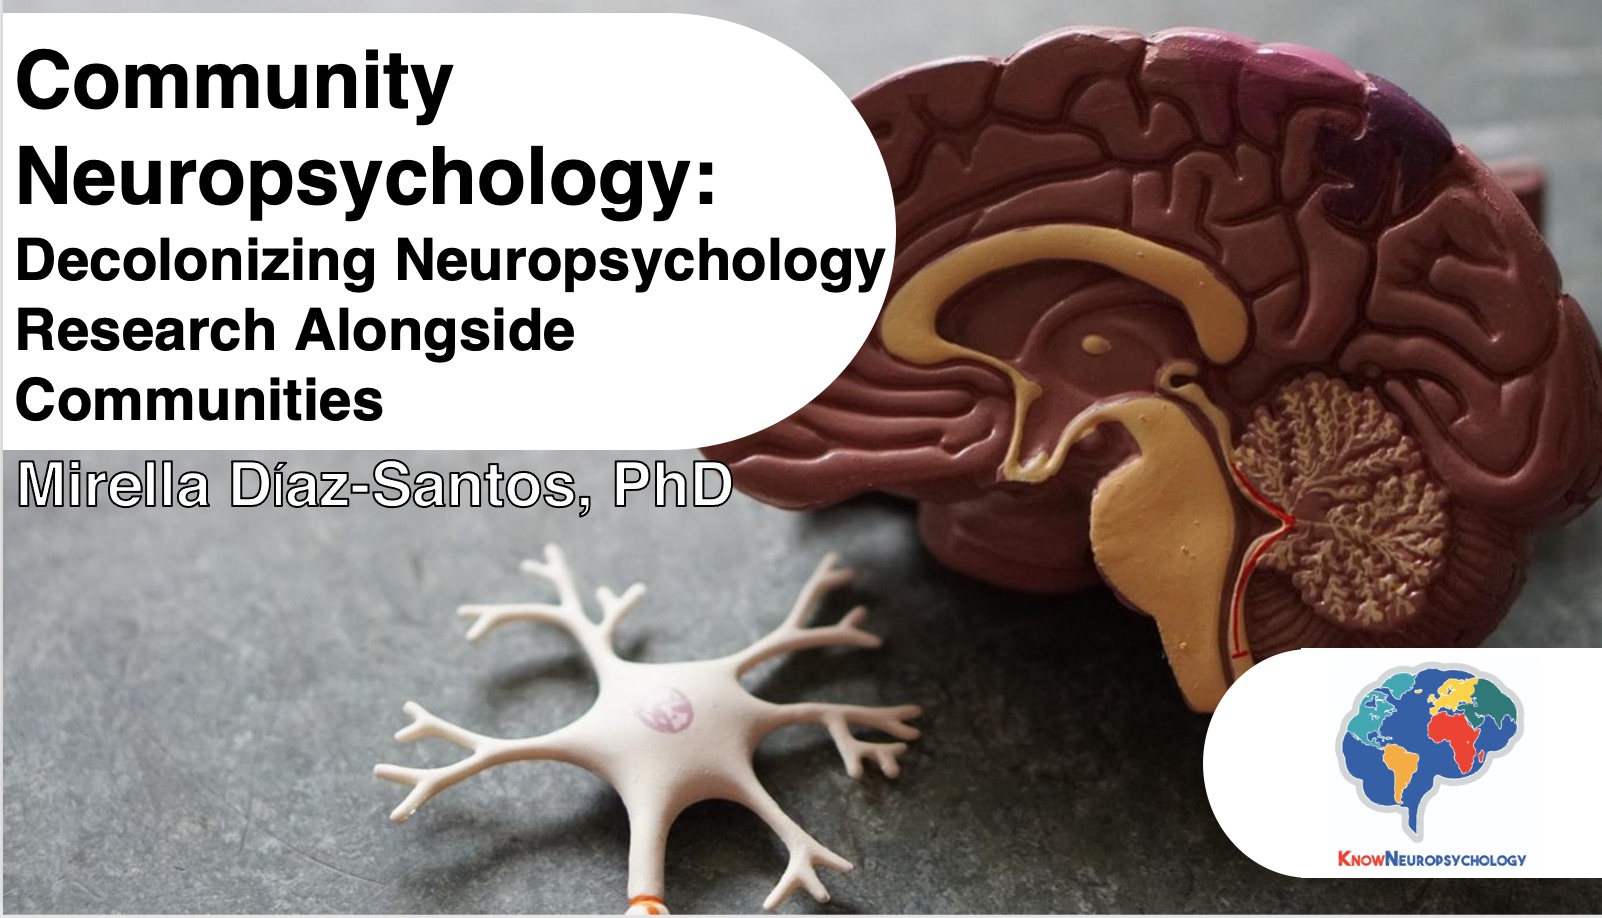 Community Neuropsychology: Decolonizing Neuropsychology Research Alongside Communities with Dr. Mirelle Diaz-Santos on November 28, 2022.